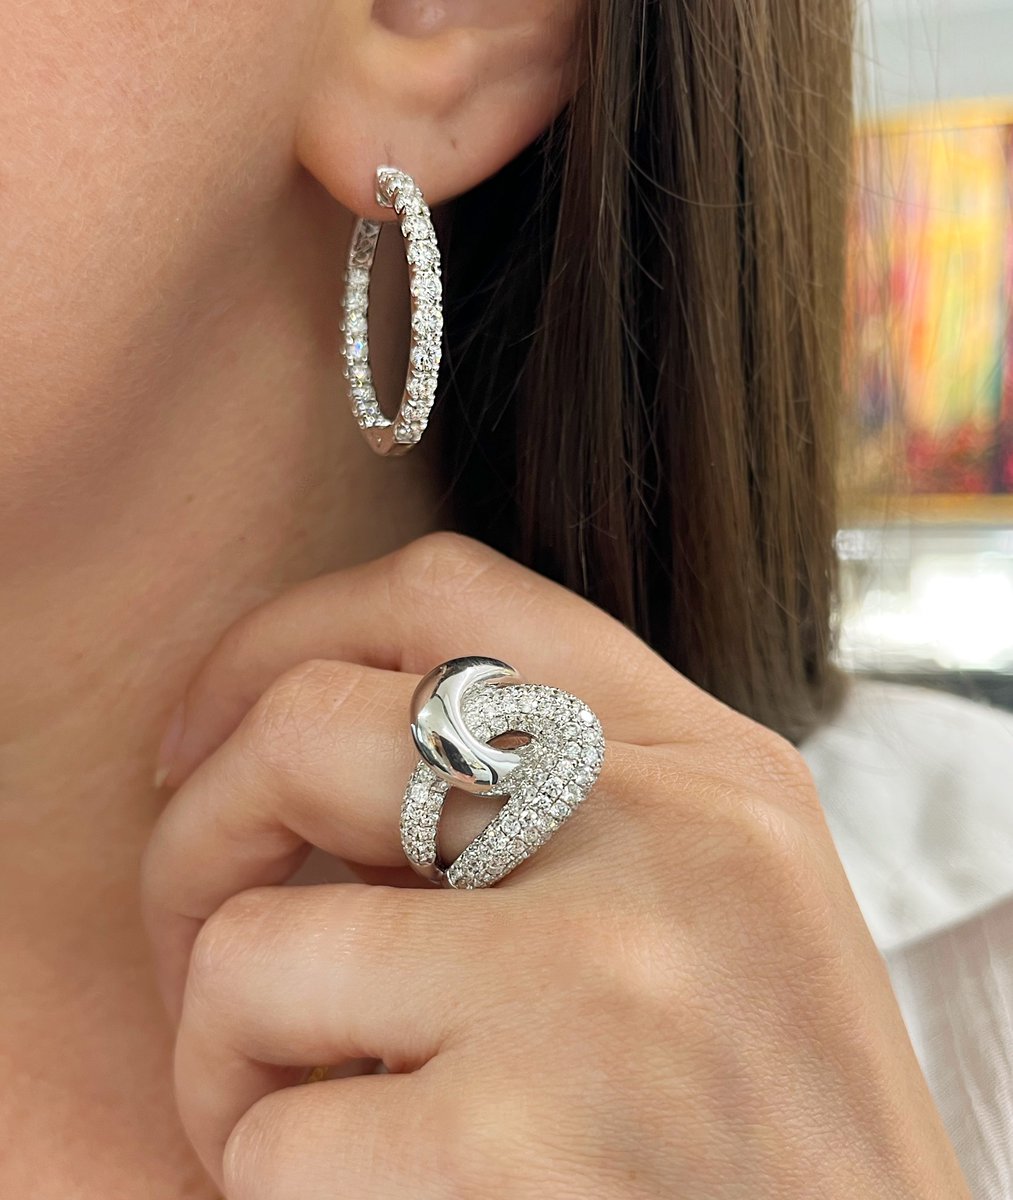 Diamonds with every twist! What do you think of this combo?

#diamondjewelry #Diamonds #hoops #fashionring #style #fashion #diamondhoops #giftideas #earrings #rings #FridayFeeling